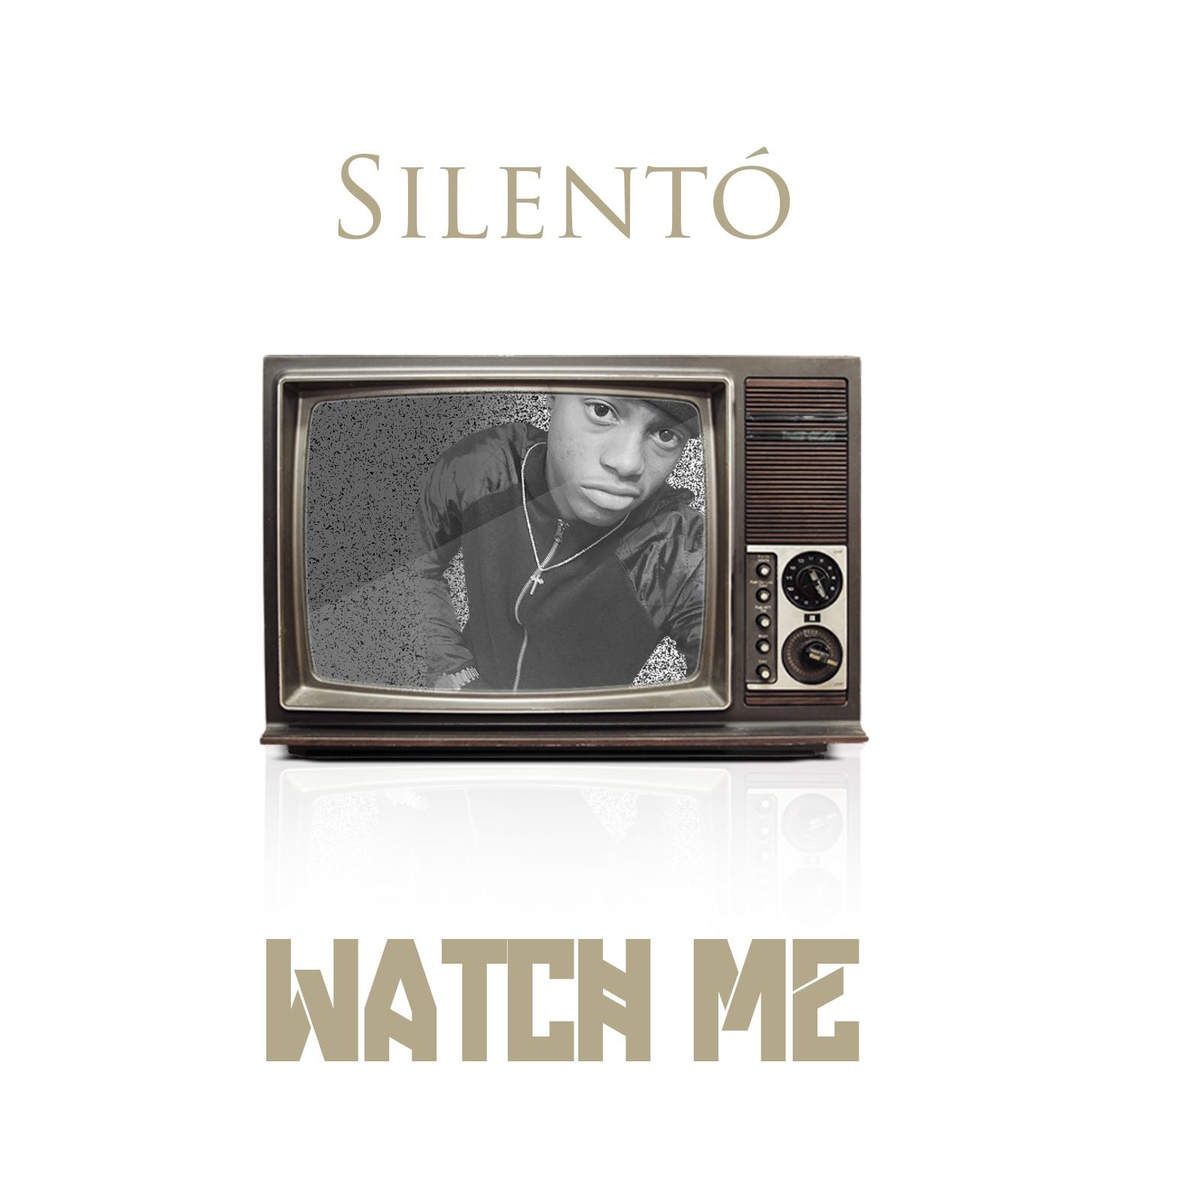 watch me(Silento演唱歌曲)